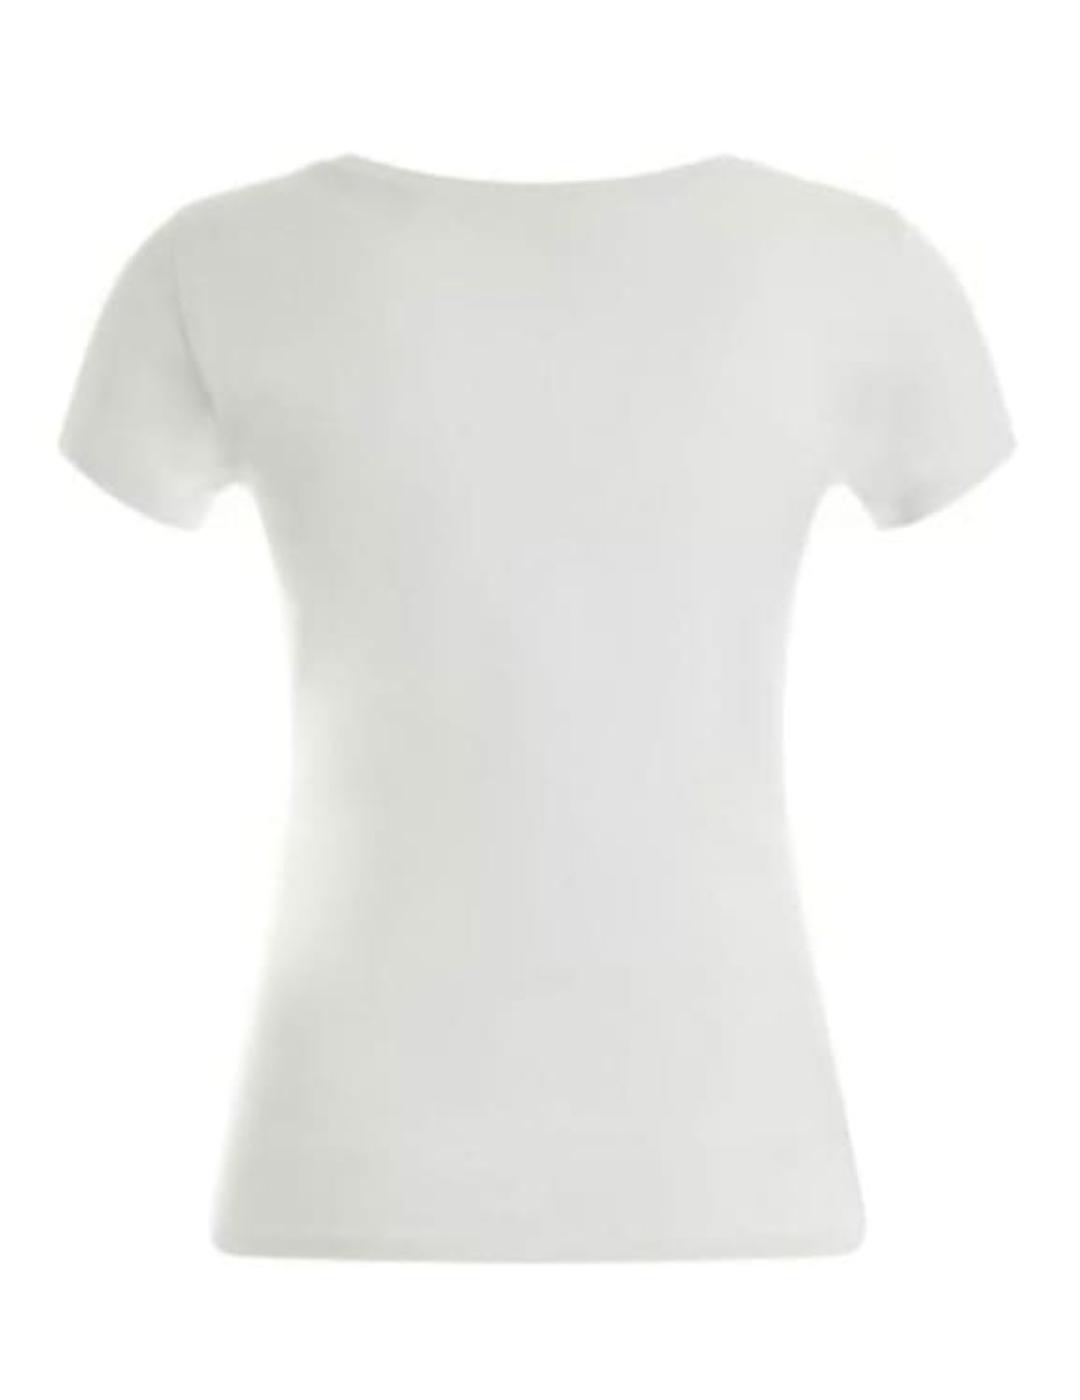 Camiseta Guess Flame blanca de manga corta para mujer